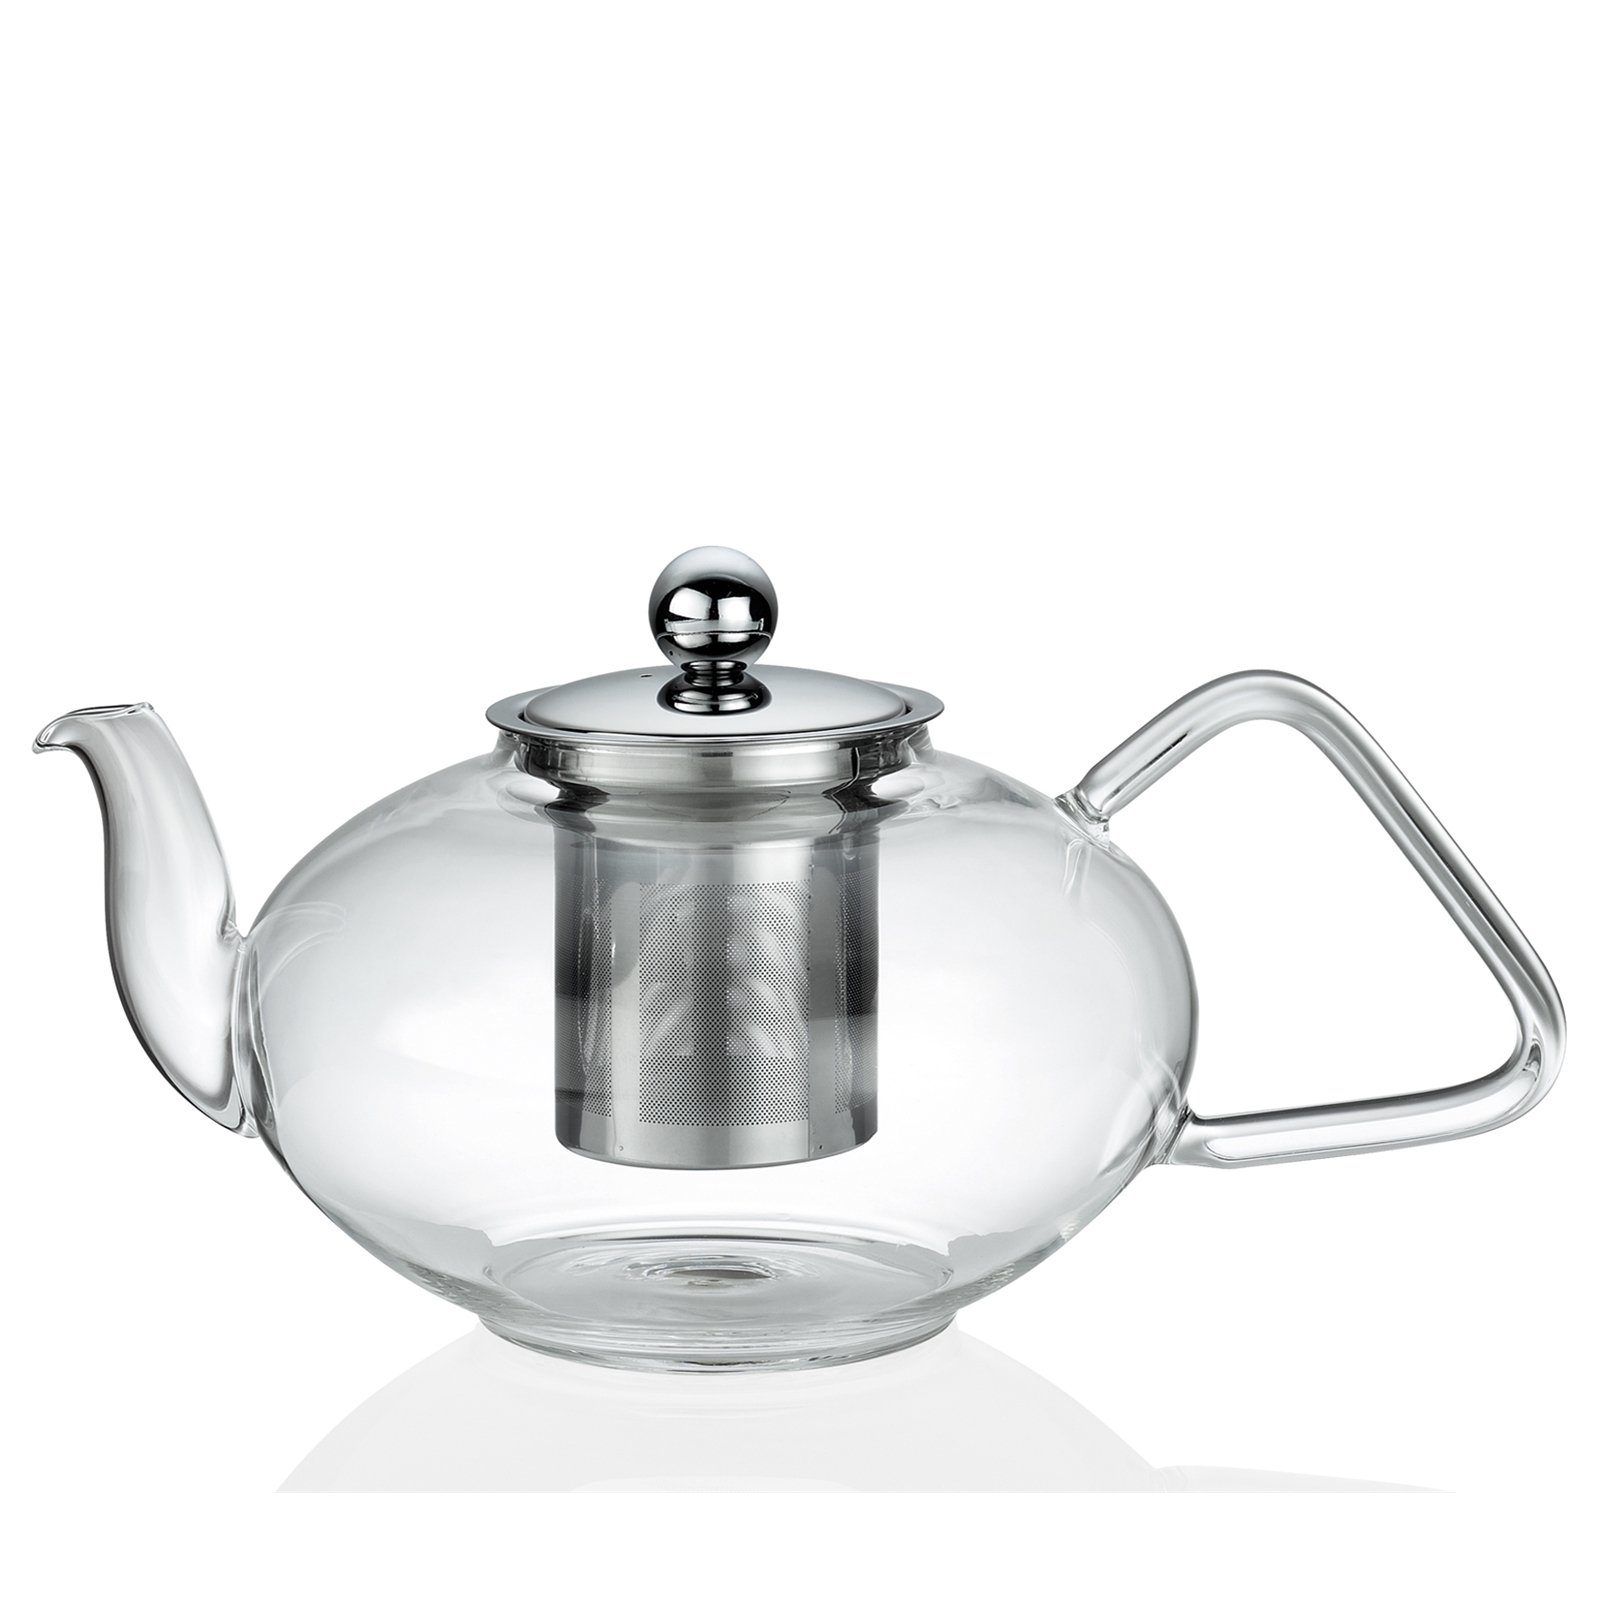 Küchenprofi Teekanne Teekanne Tibet Tea, 1.5 l, (Stück, 1 Teekanne), mit Edelstahlfilter